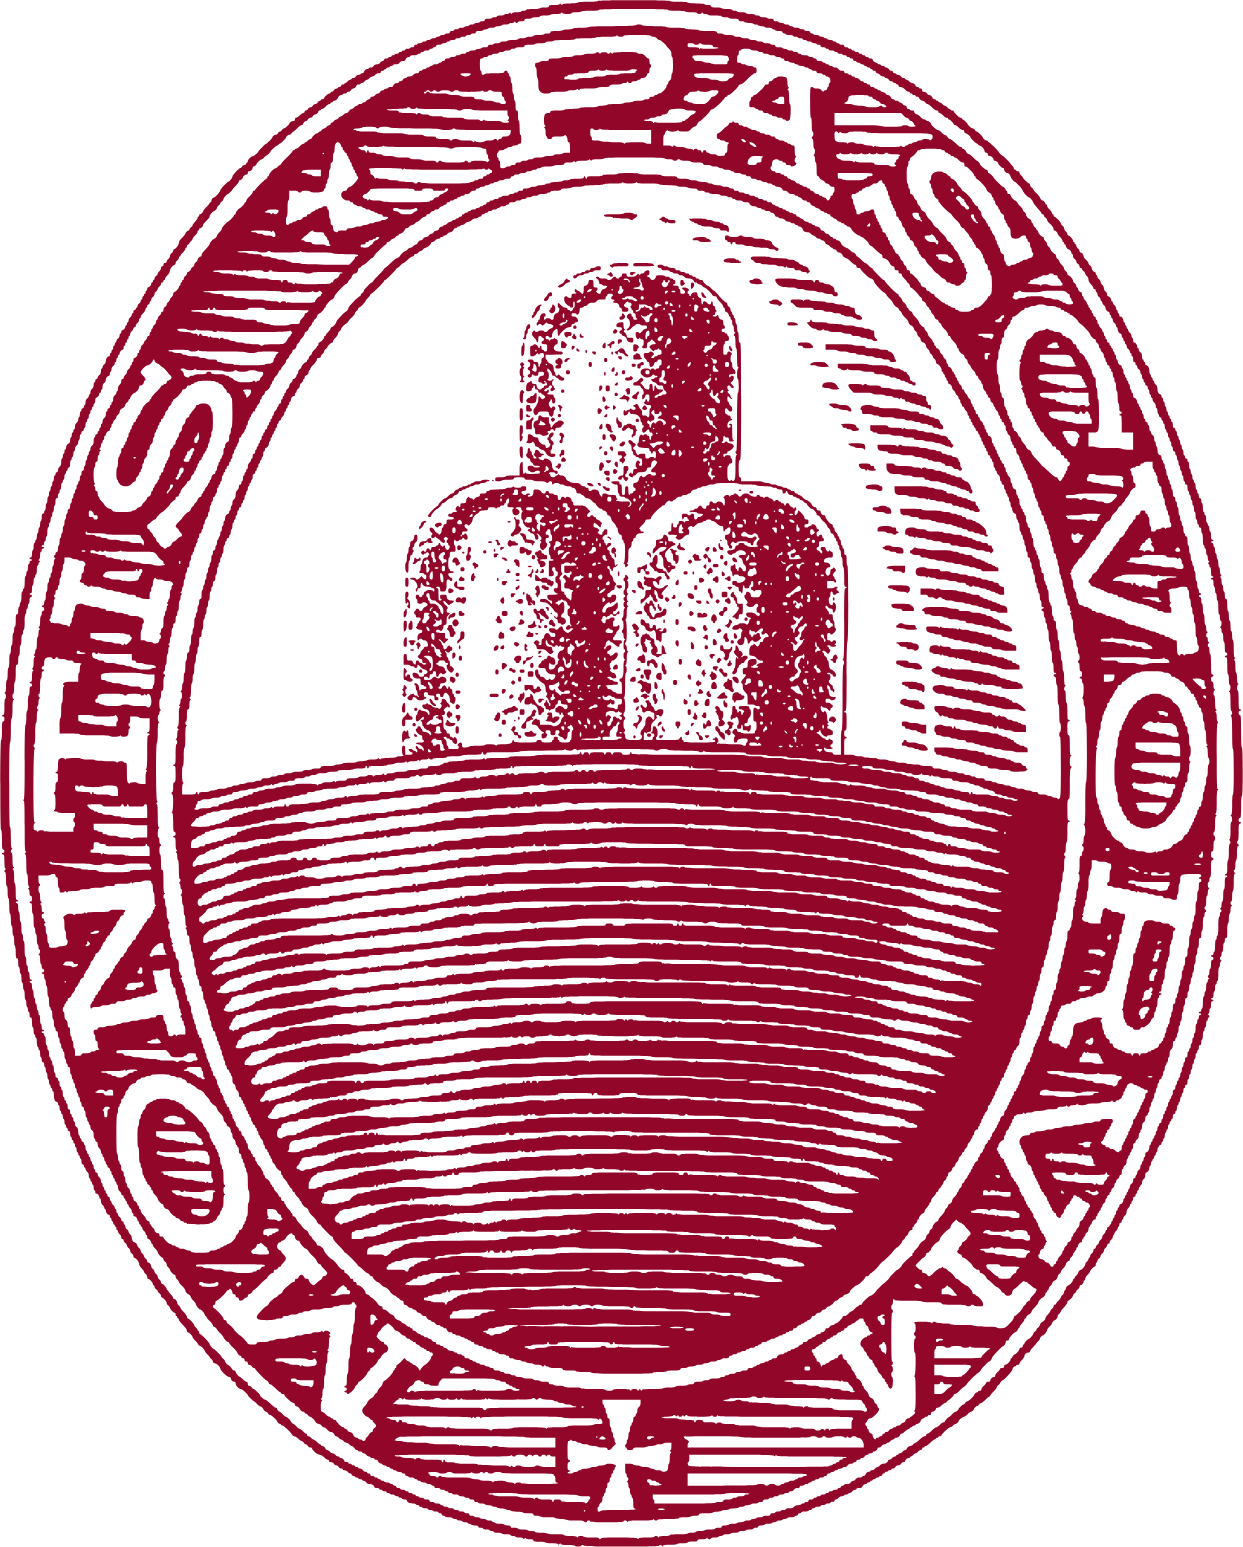 Banca Monte dei Paschi di Siena logo (PNG transparent)